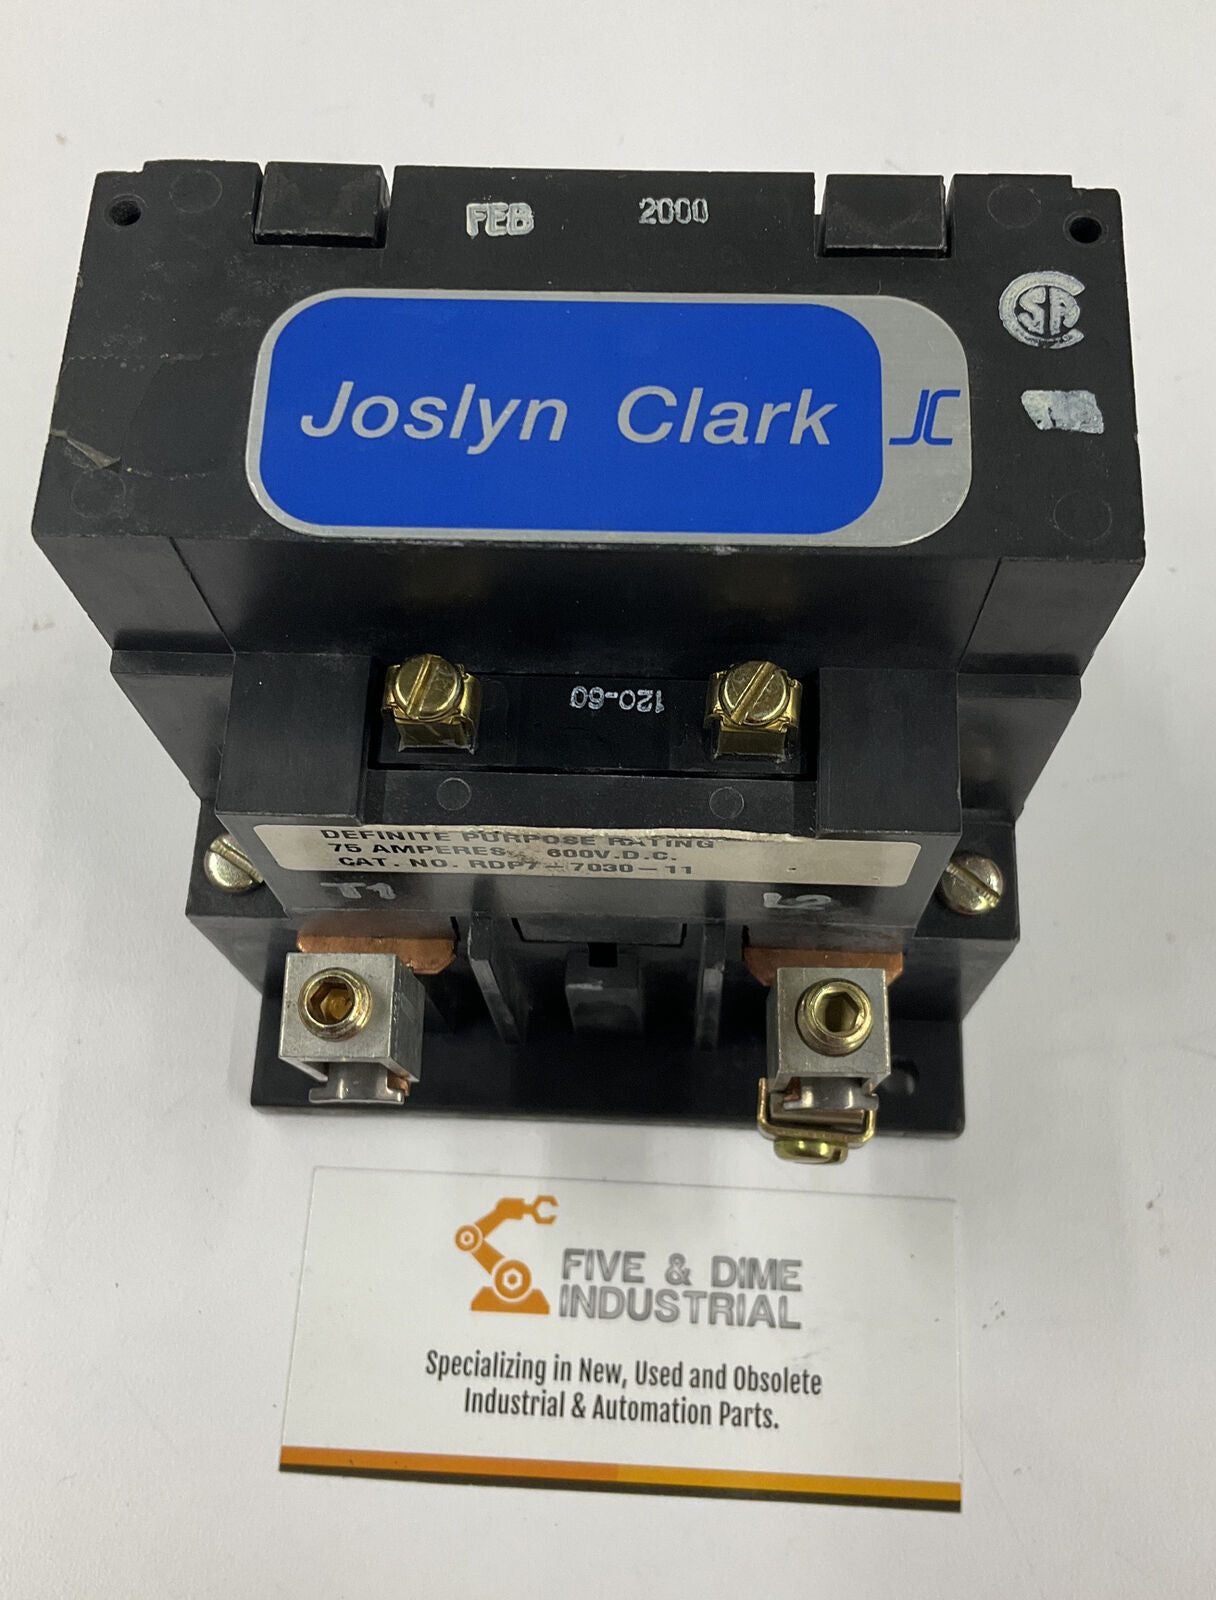 Joslyn Clark RDP7-7030-11 / 78091-50R New Contactor 75A 600vdc 120V 60HZ (GR195)